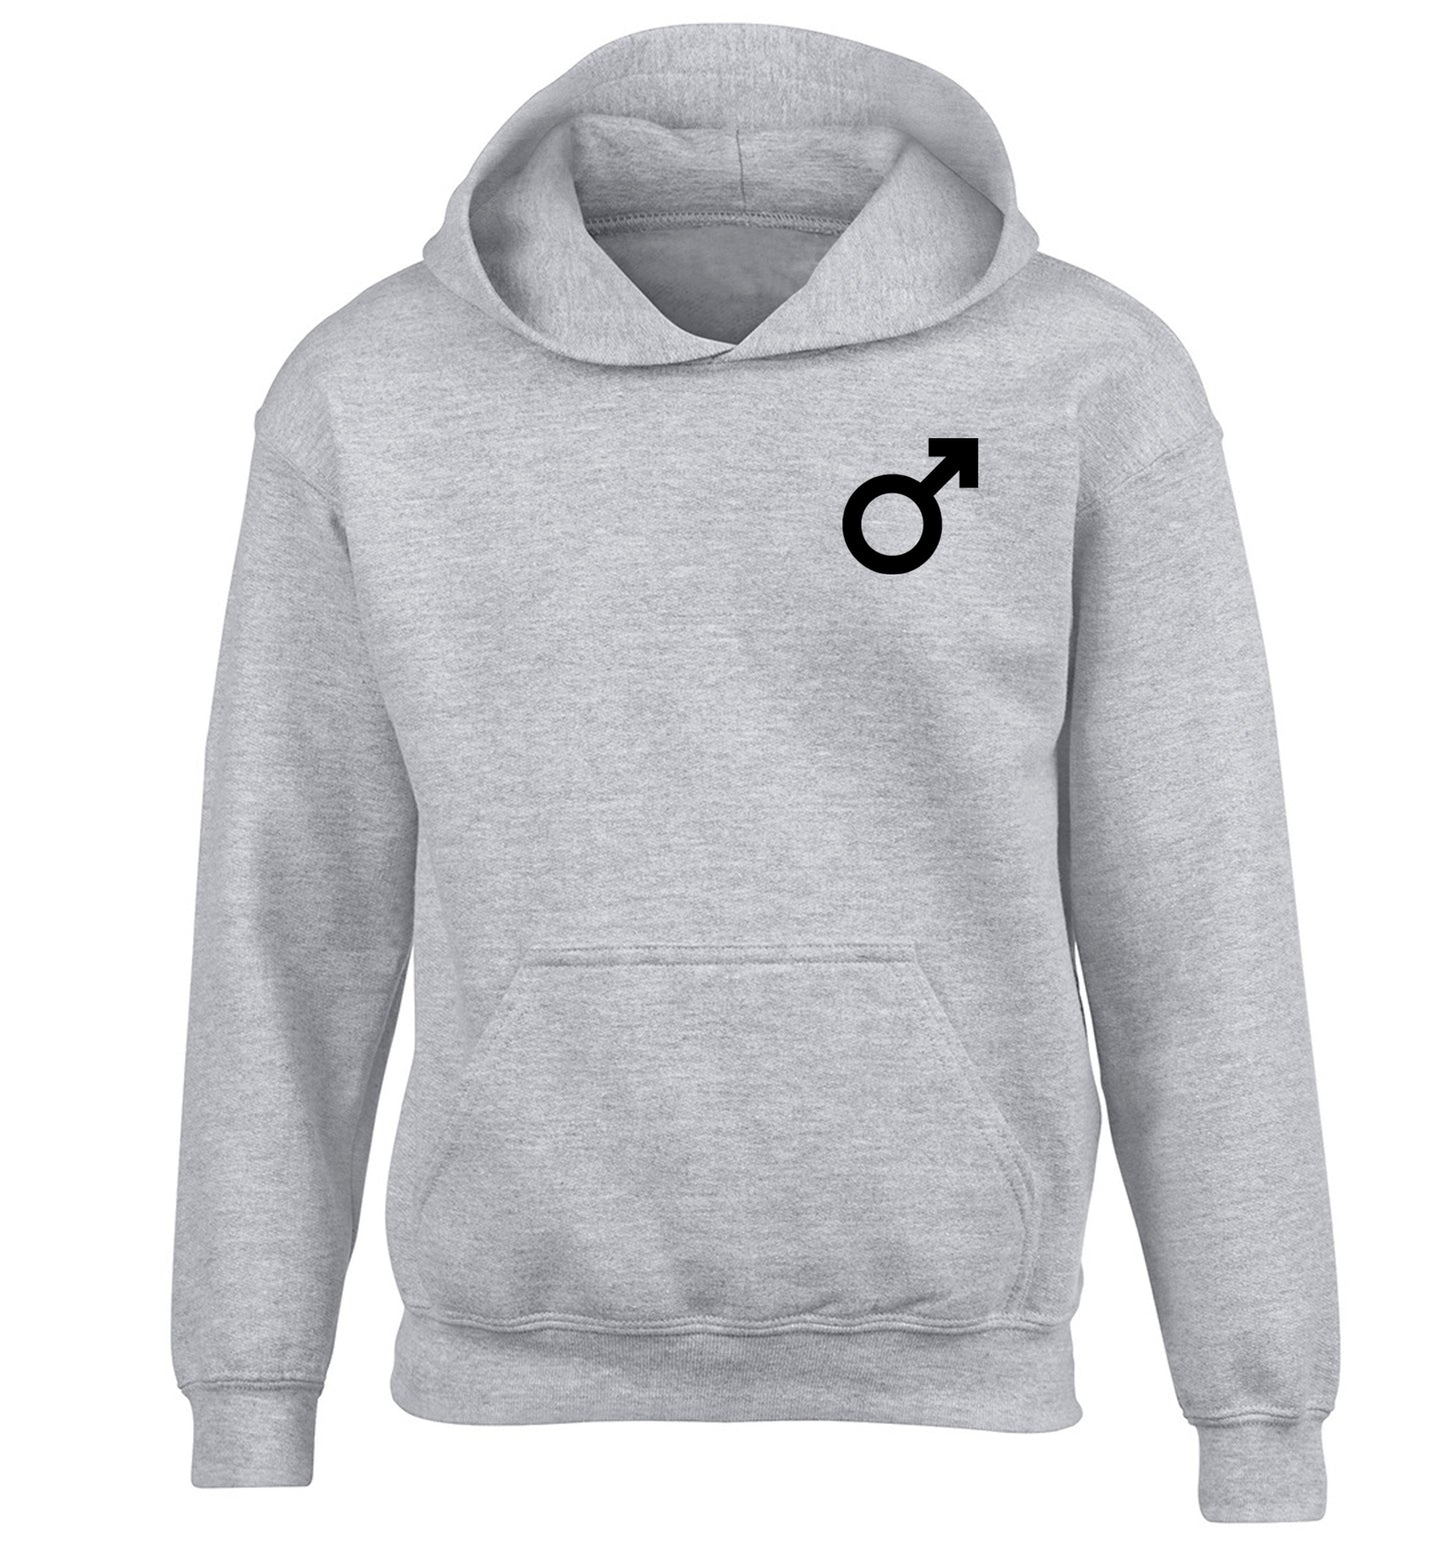 Male symbol pocket children's grey hoodie 12-14 Years